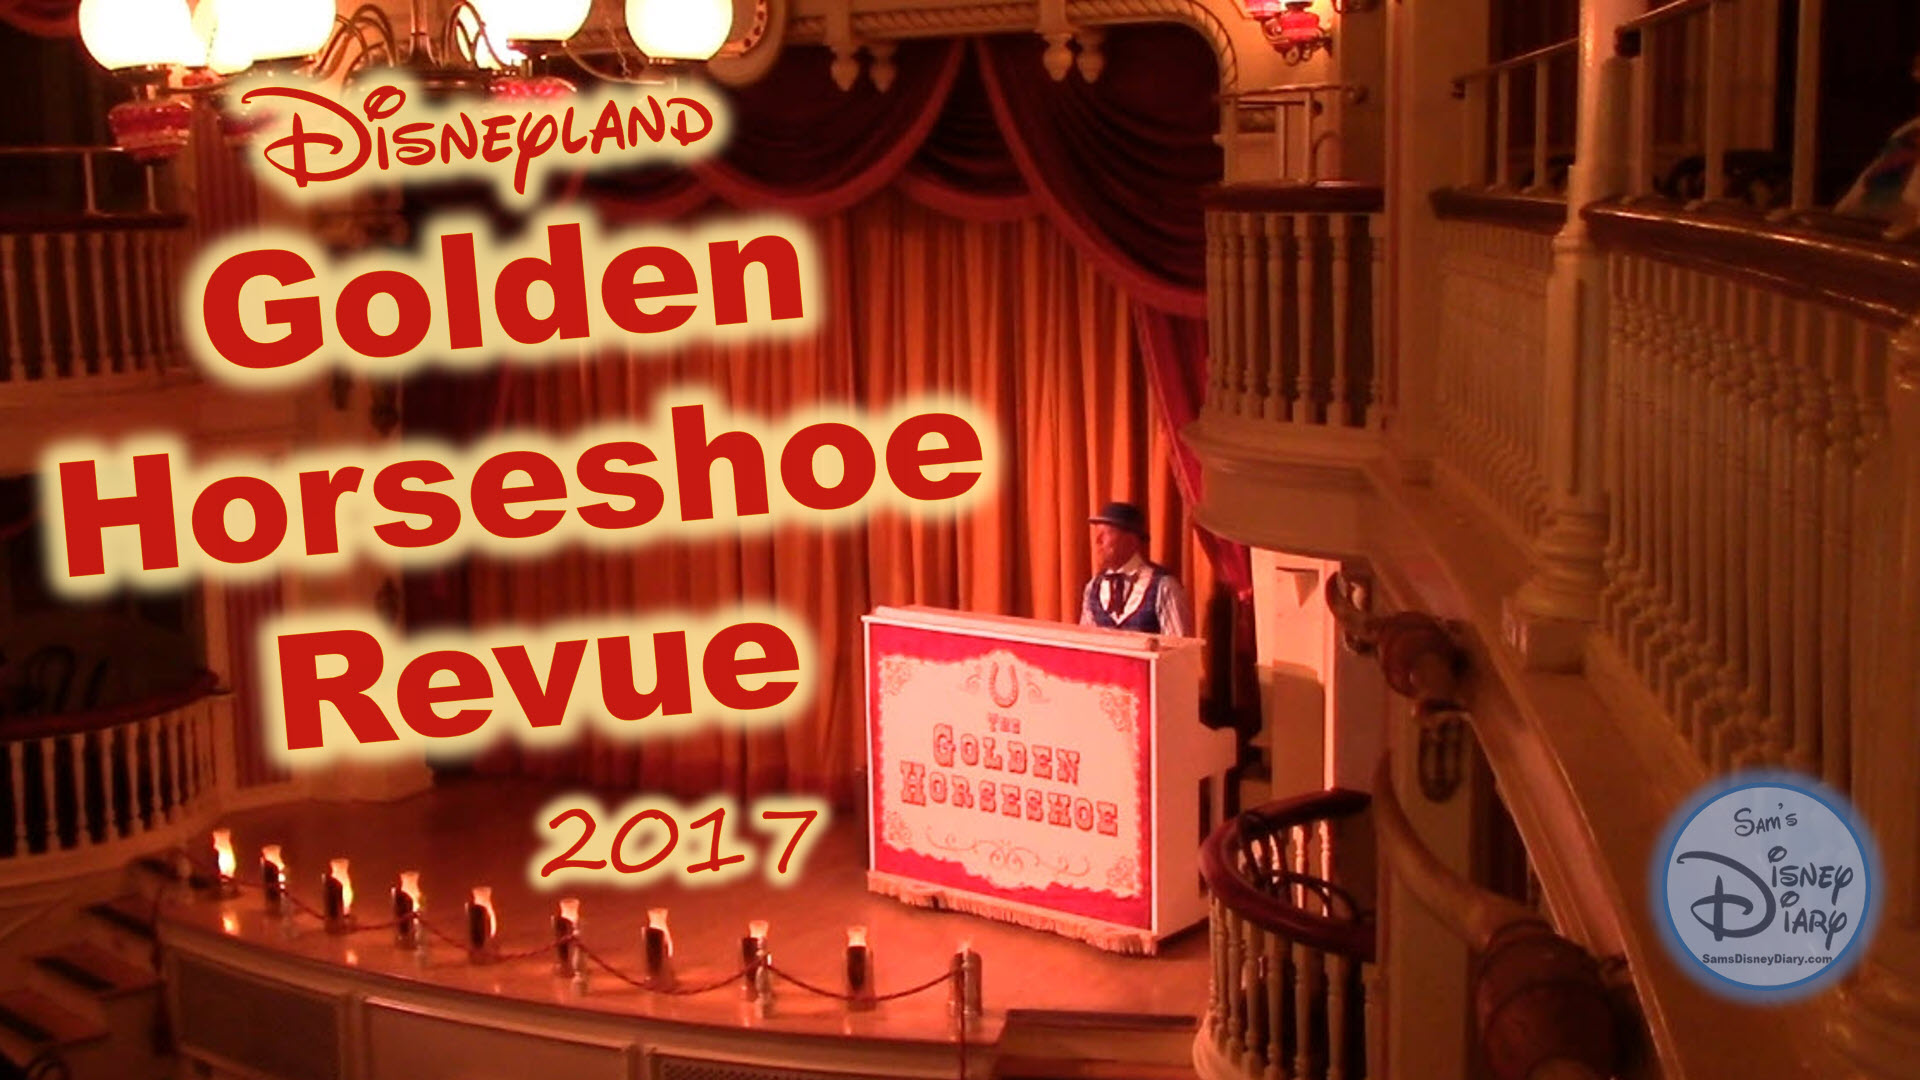 The Golden Horseshoe Revue Full Show 2017